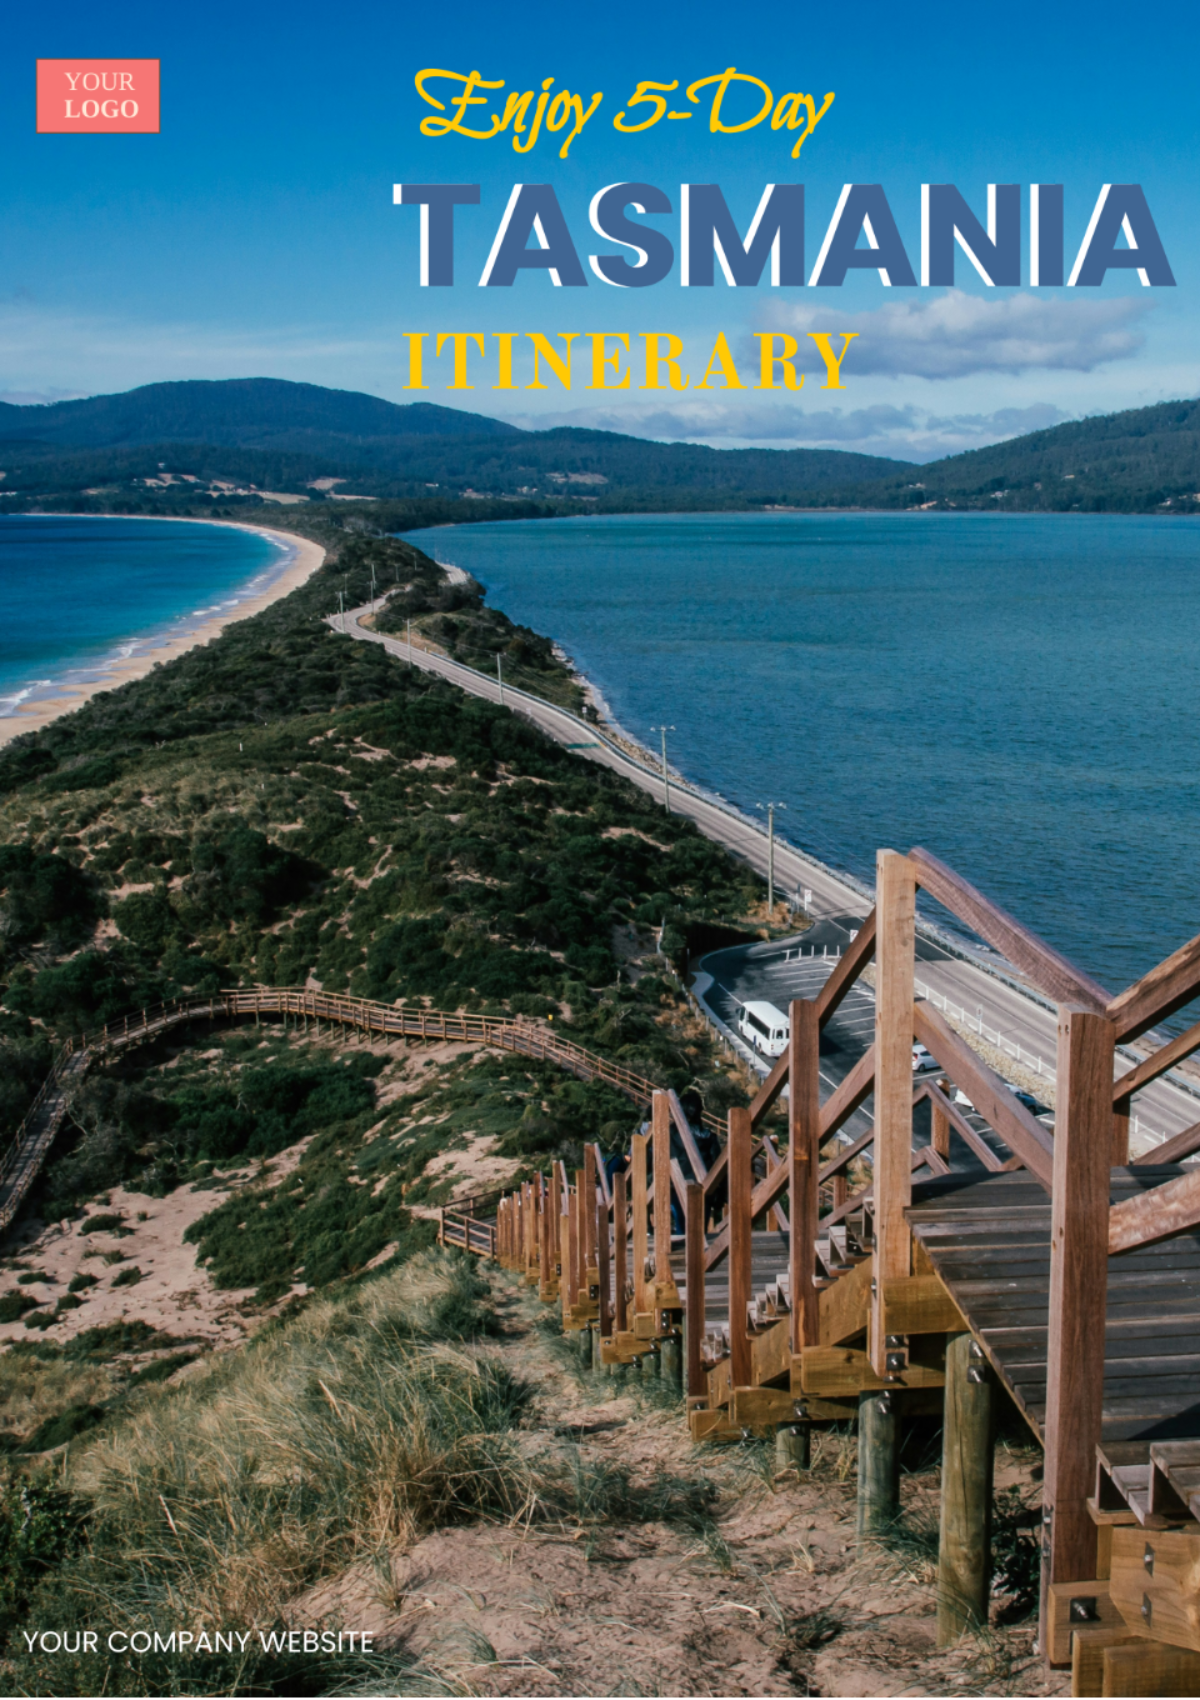 Free 5 Day Tasmania Itinerary Template